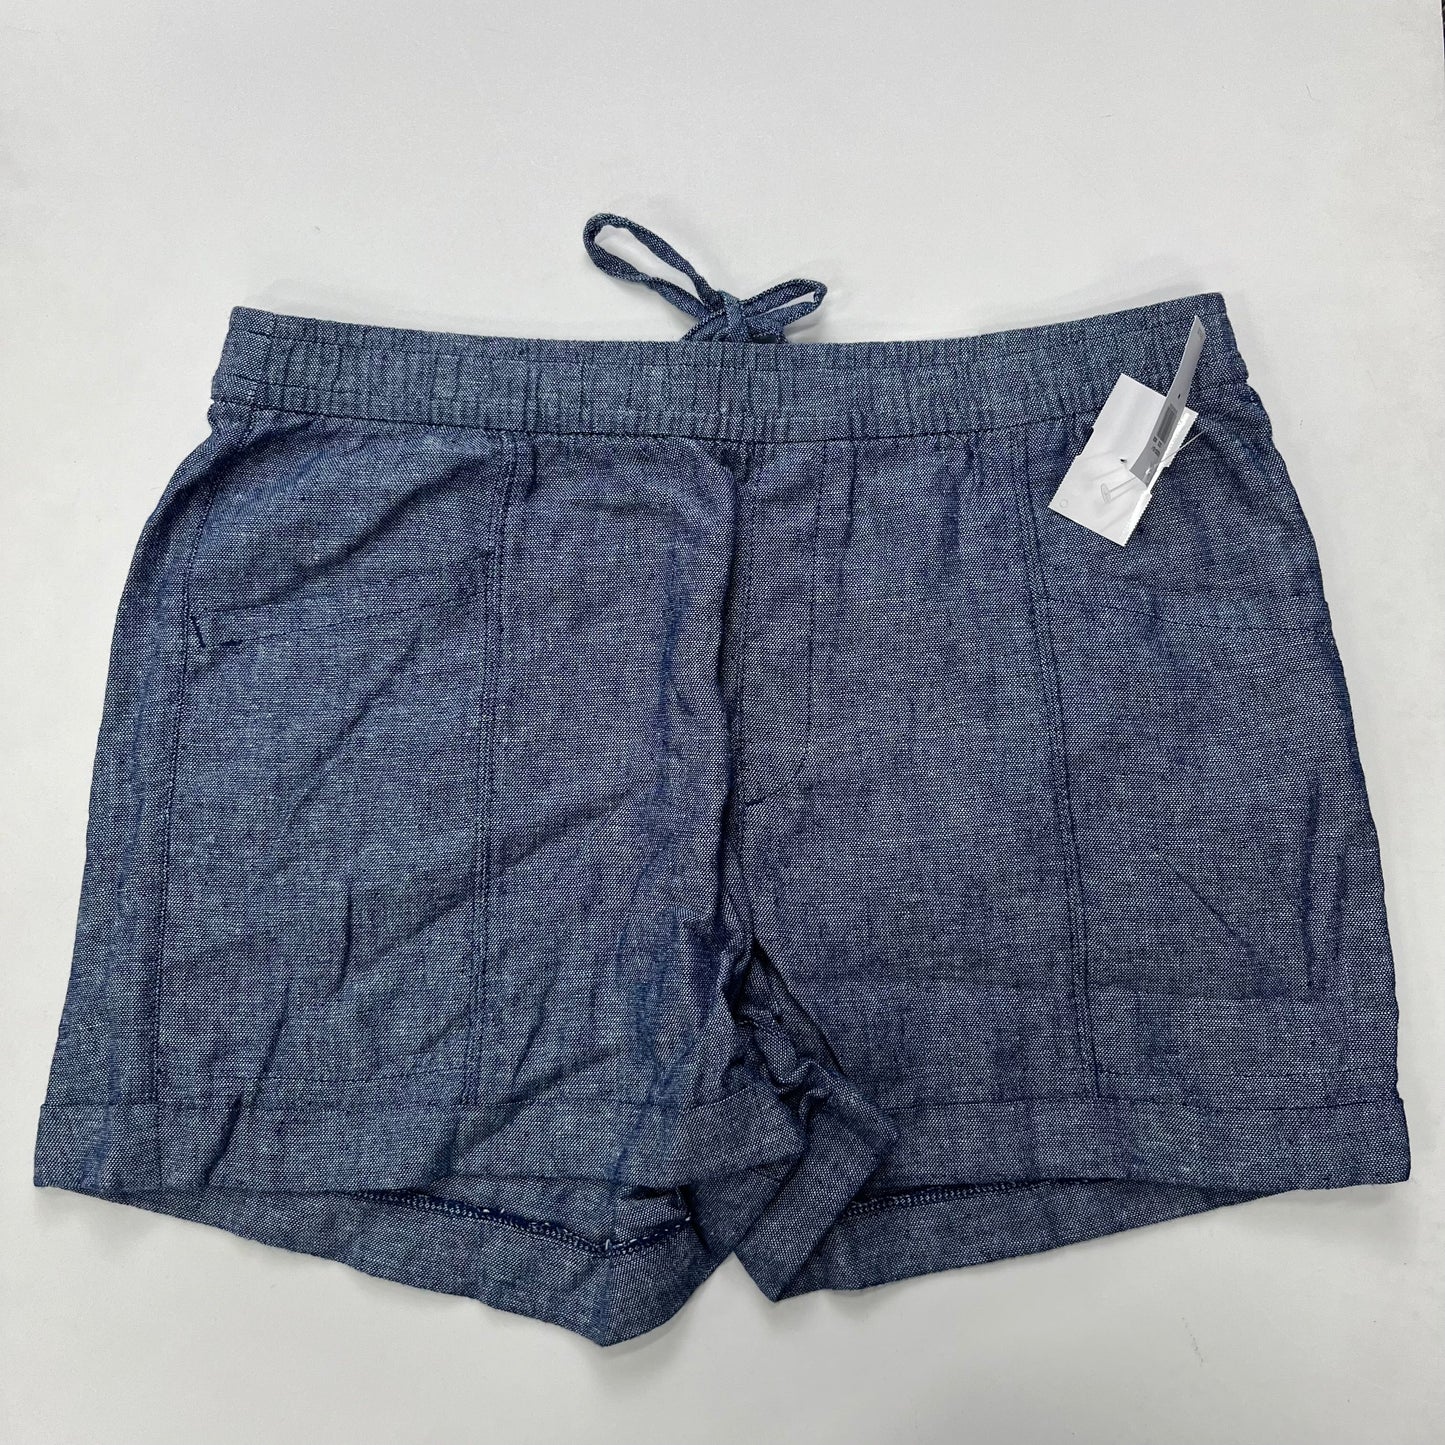 Blue Shorts Old Navy, Size M